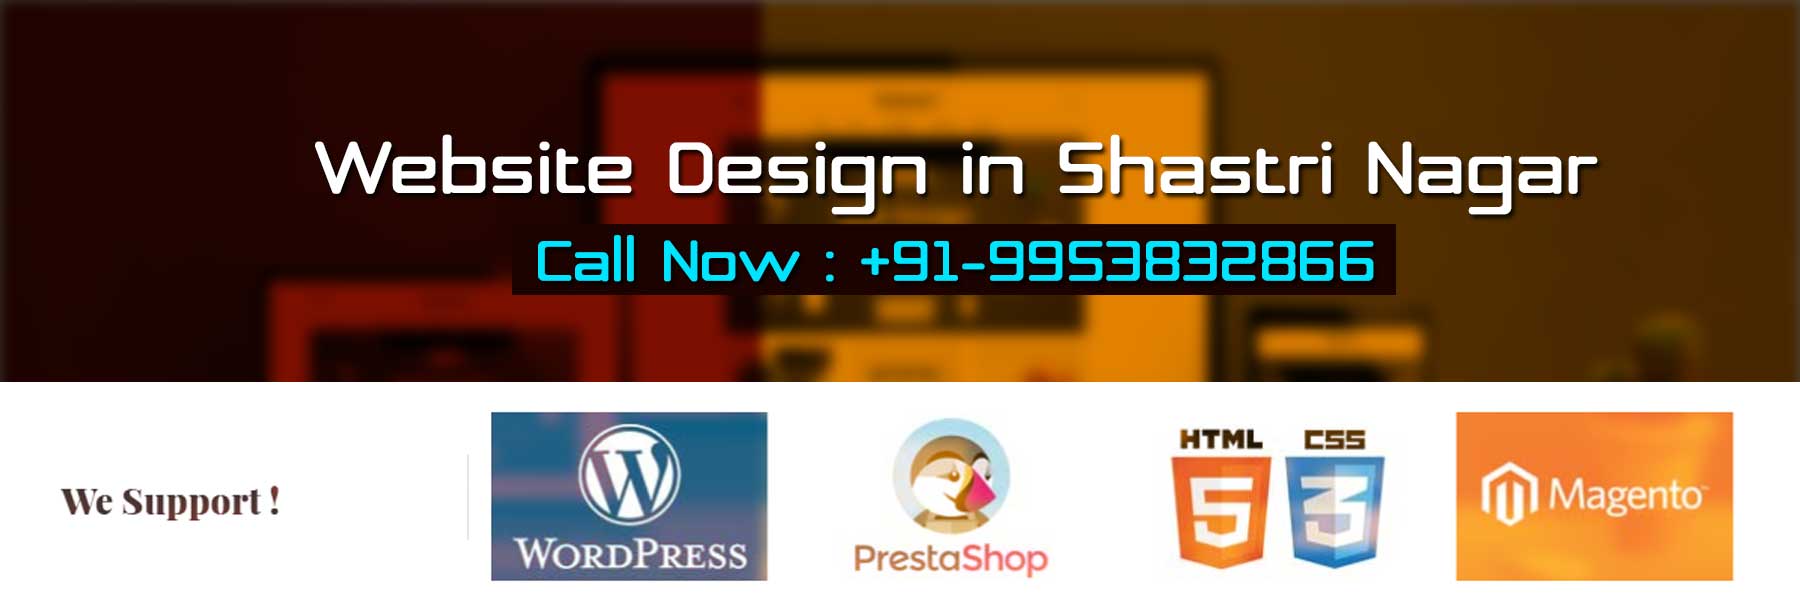 Website Design in Shastri Nagar